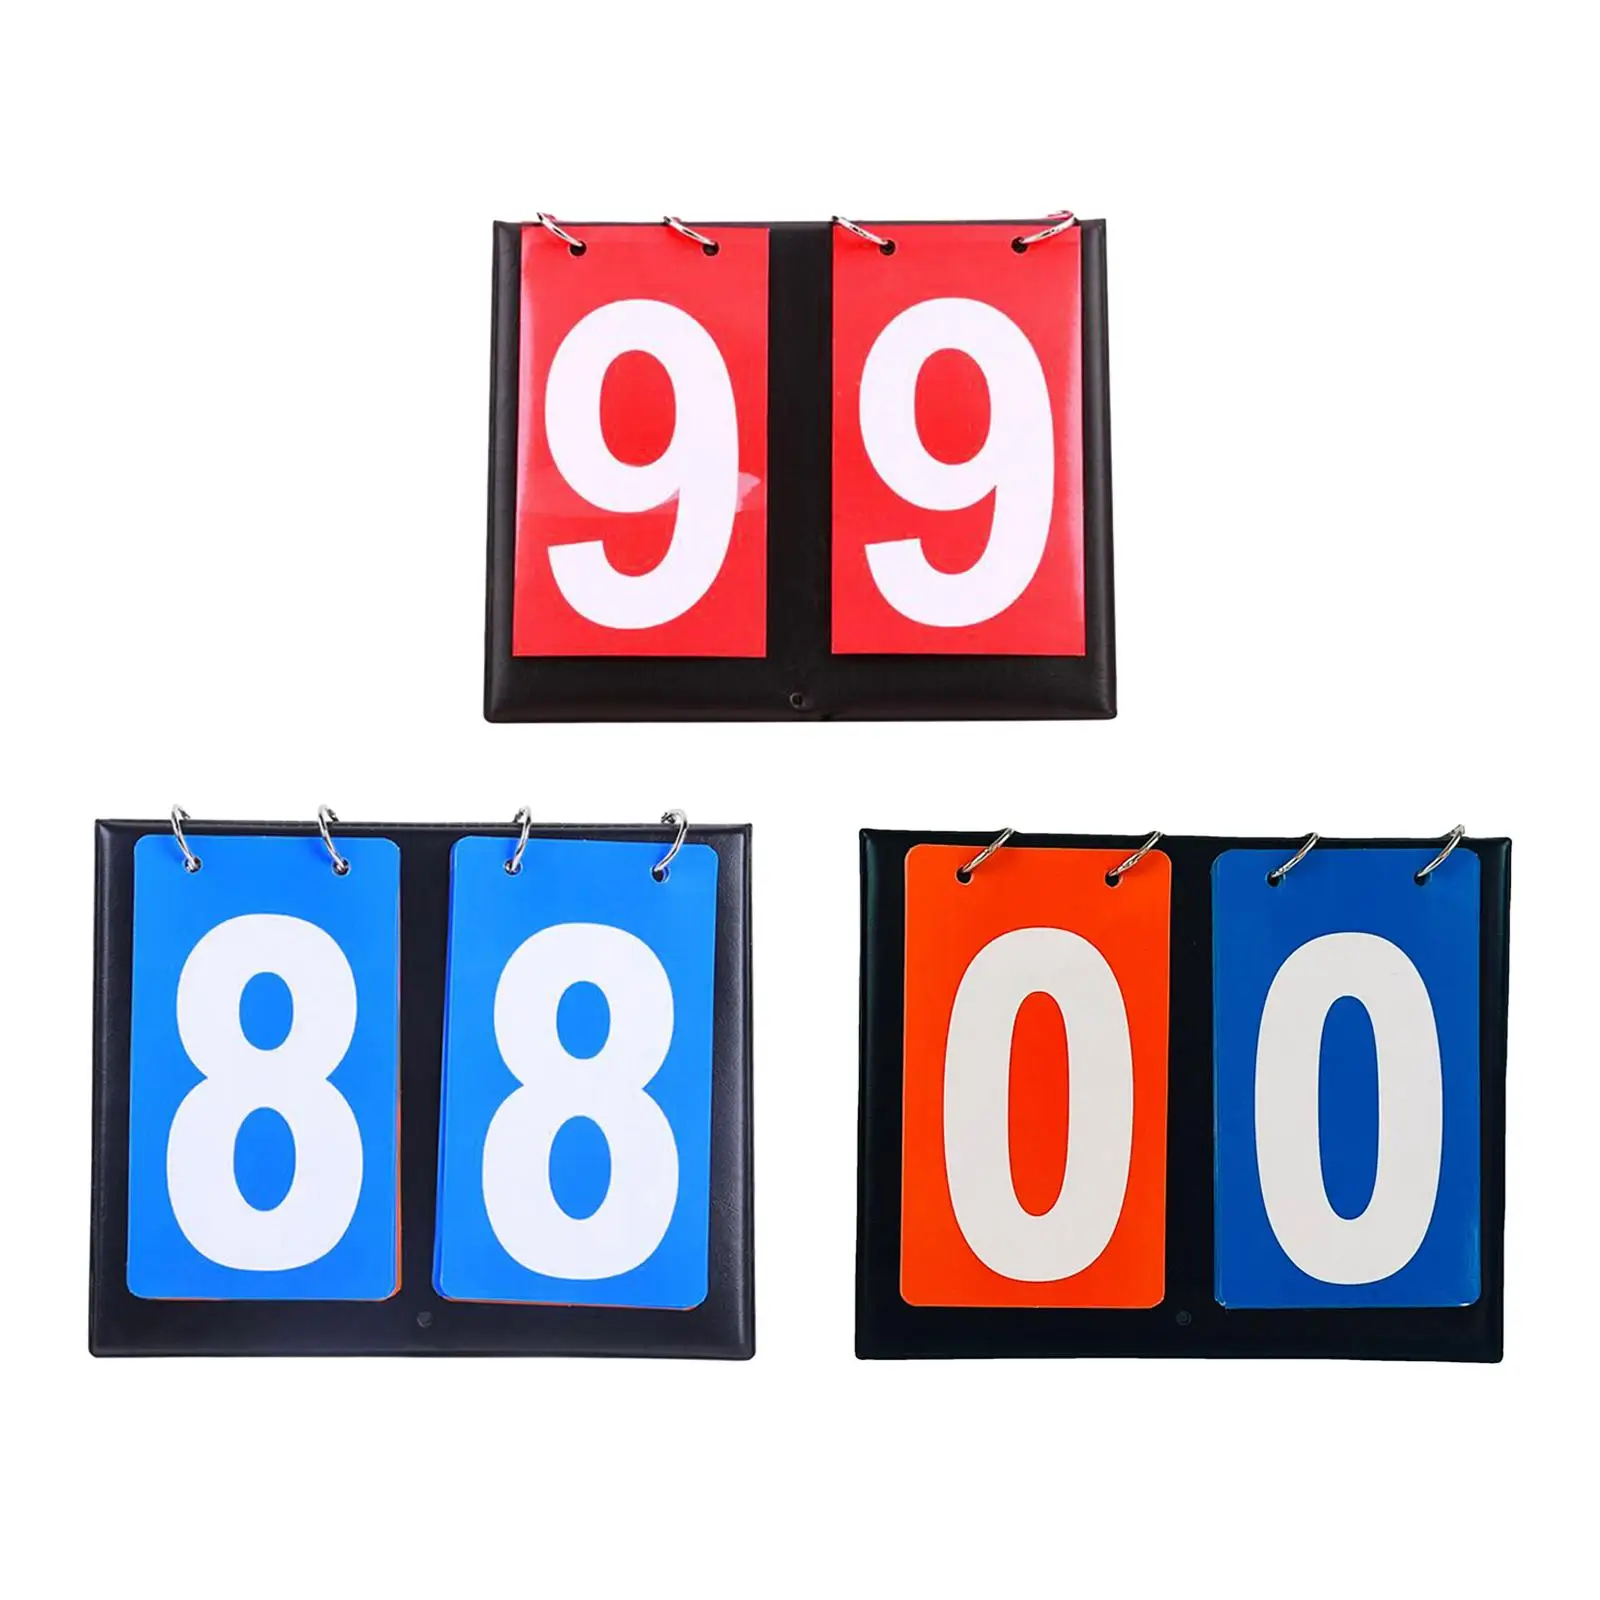 Multipurpose Table Scoreboard, Flips up Removable Portable 2 digits Score Keeper